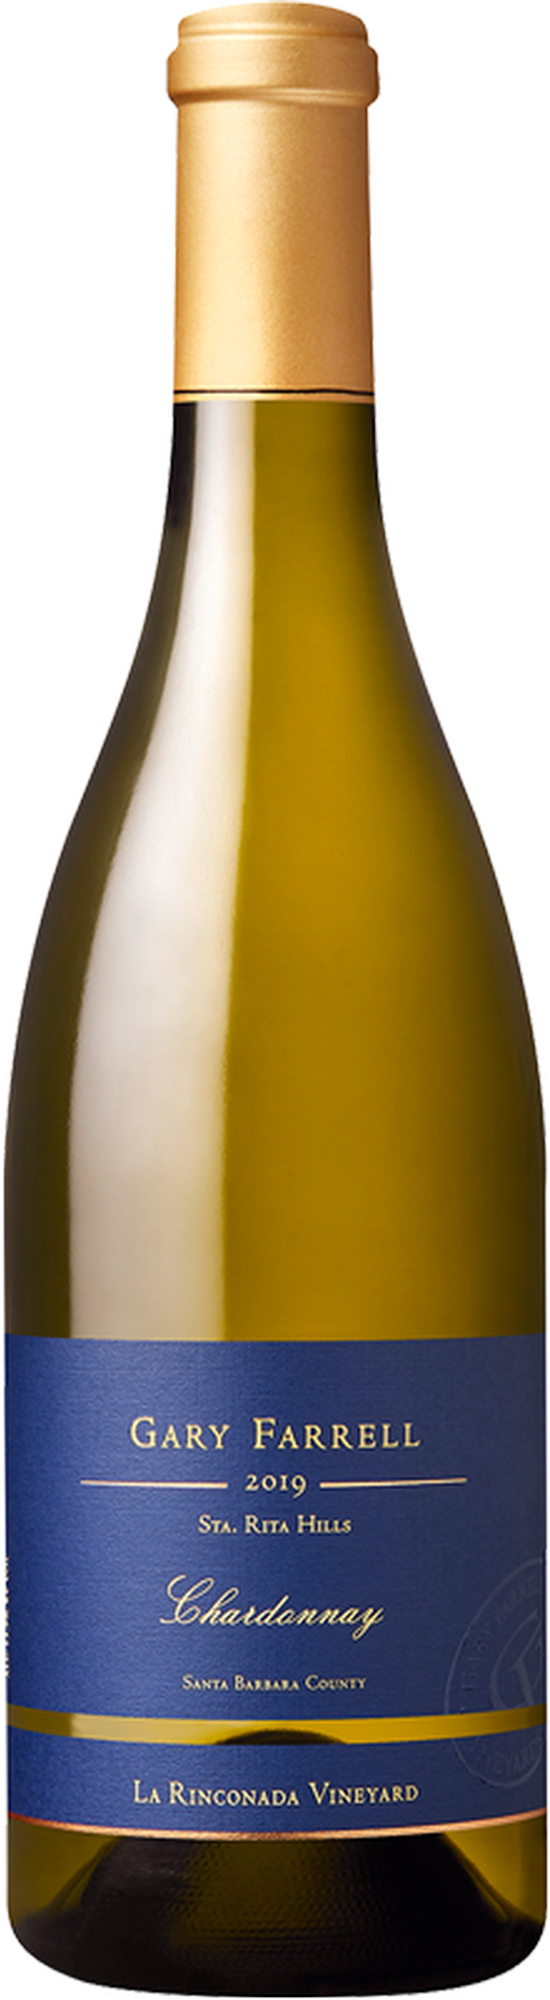 2019 La Rinconada Vineyard Chardonnay